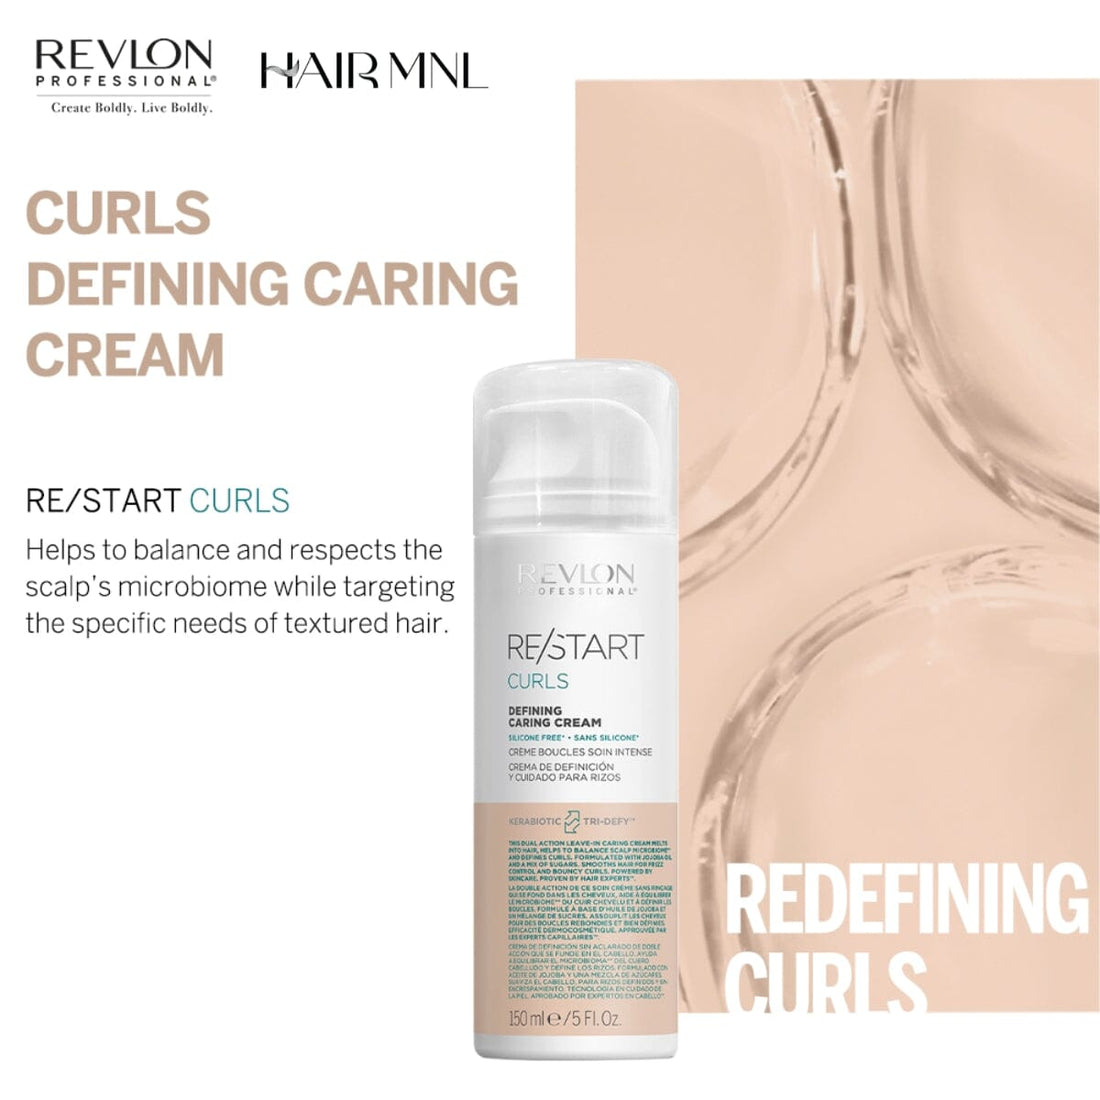 HairMNL Revlon Professional ReStart Curls Defining Caring Cream 150ml Benefits